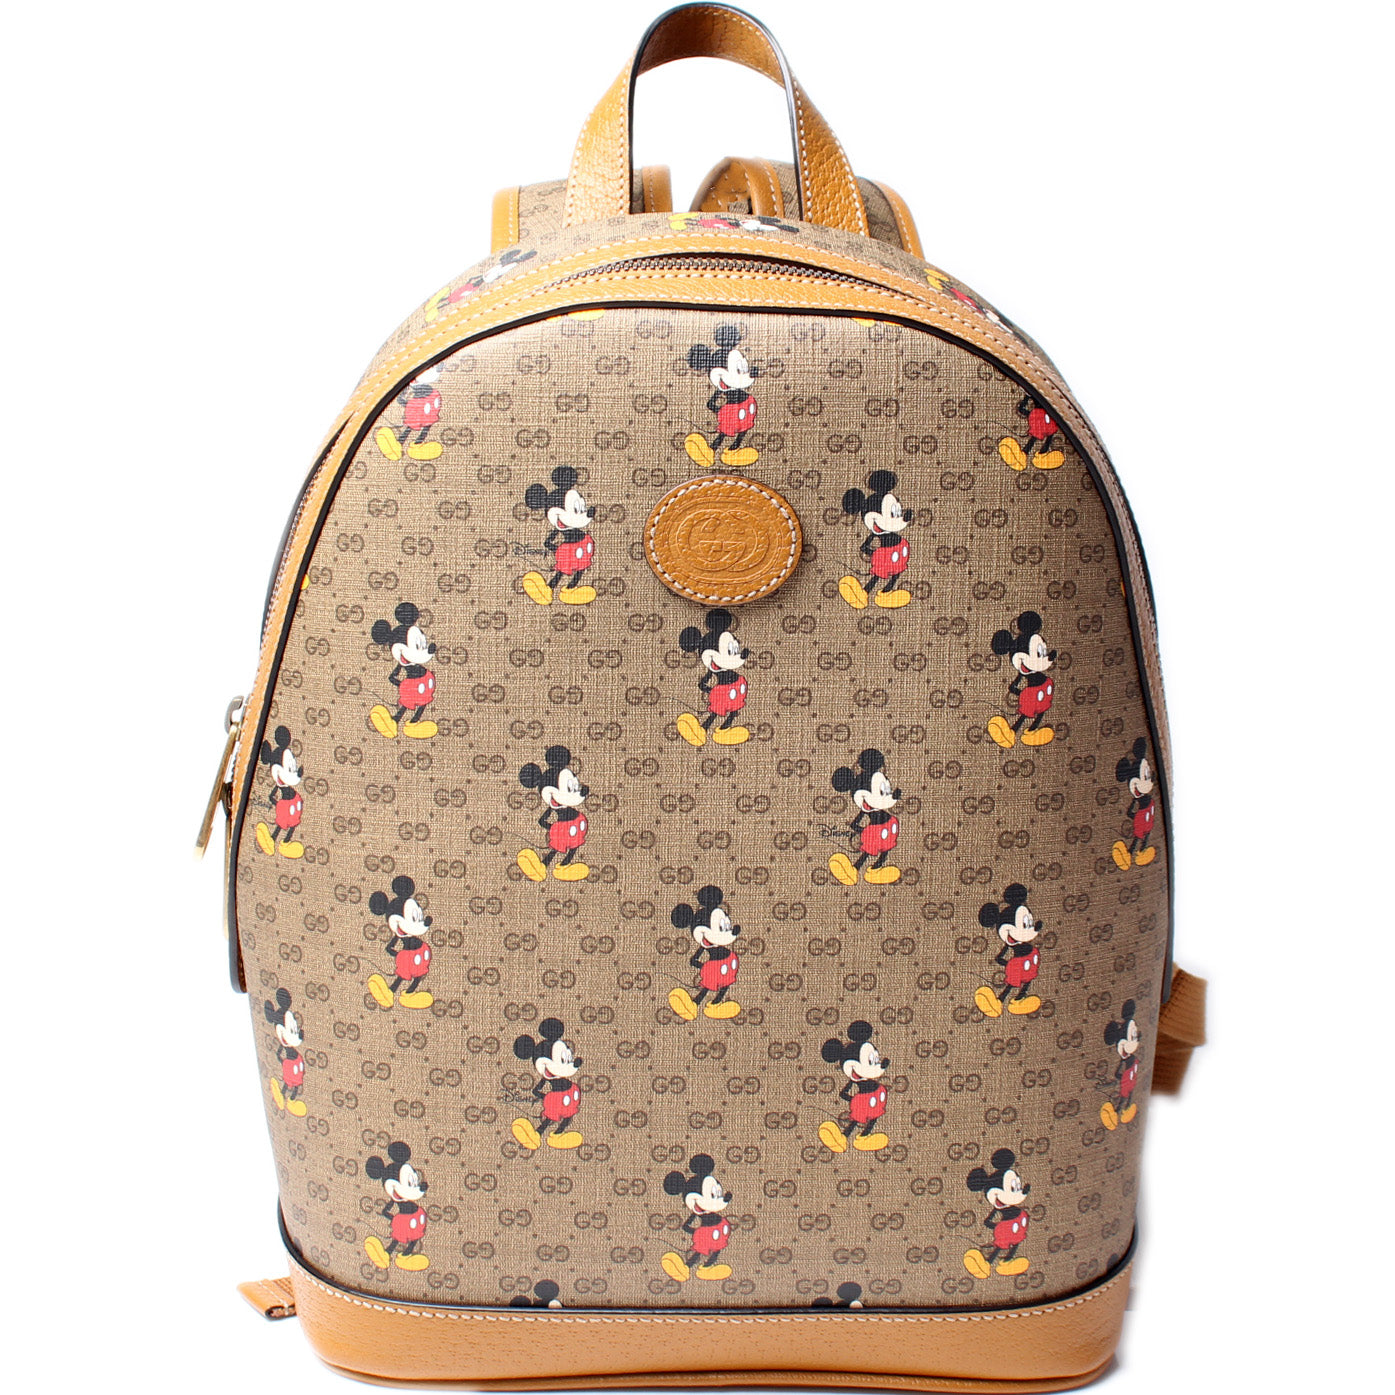 Gucci x Disney Backpack Mini GG Supreme Mickey Mouse Small Beige